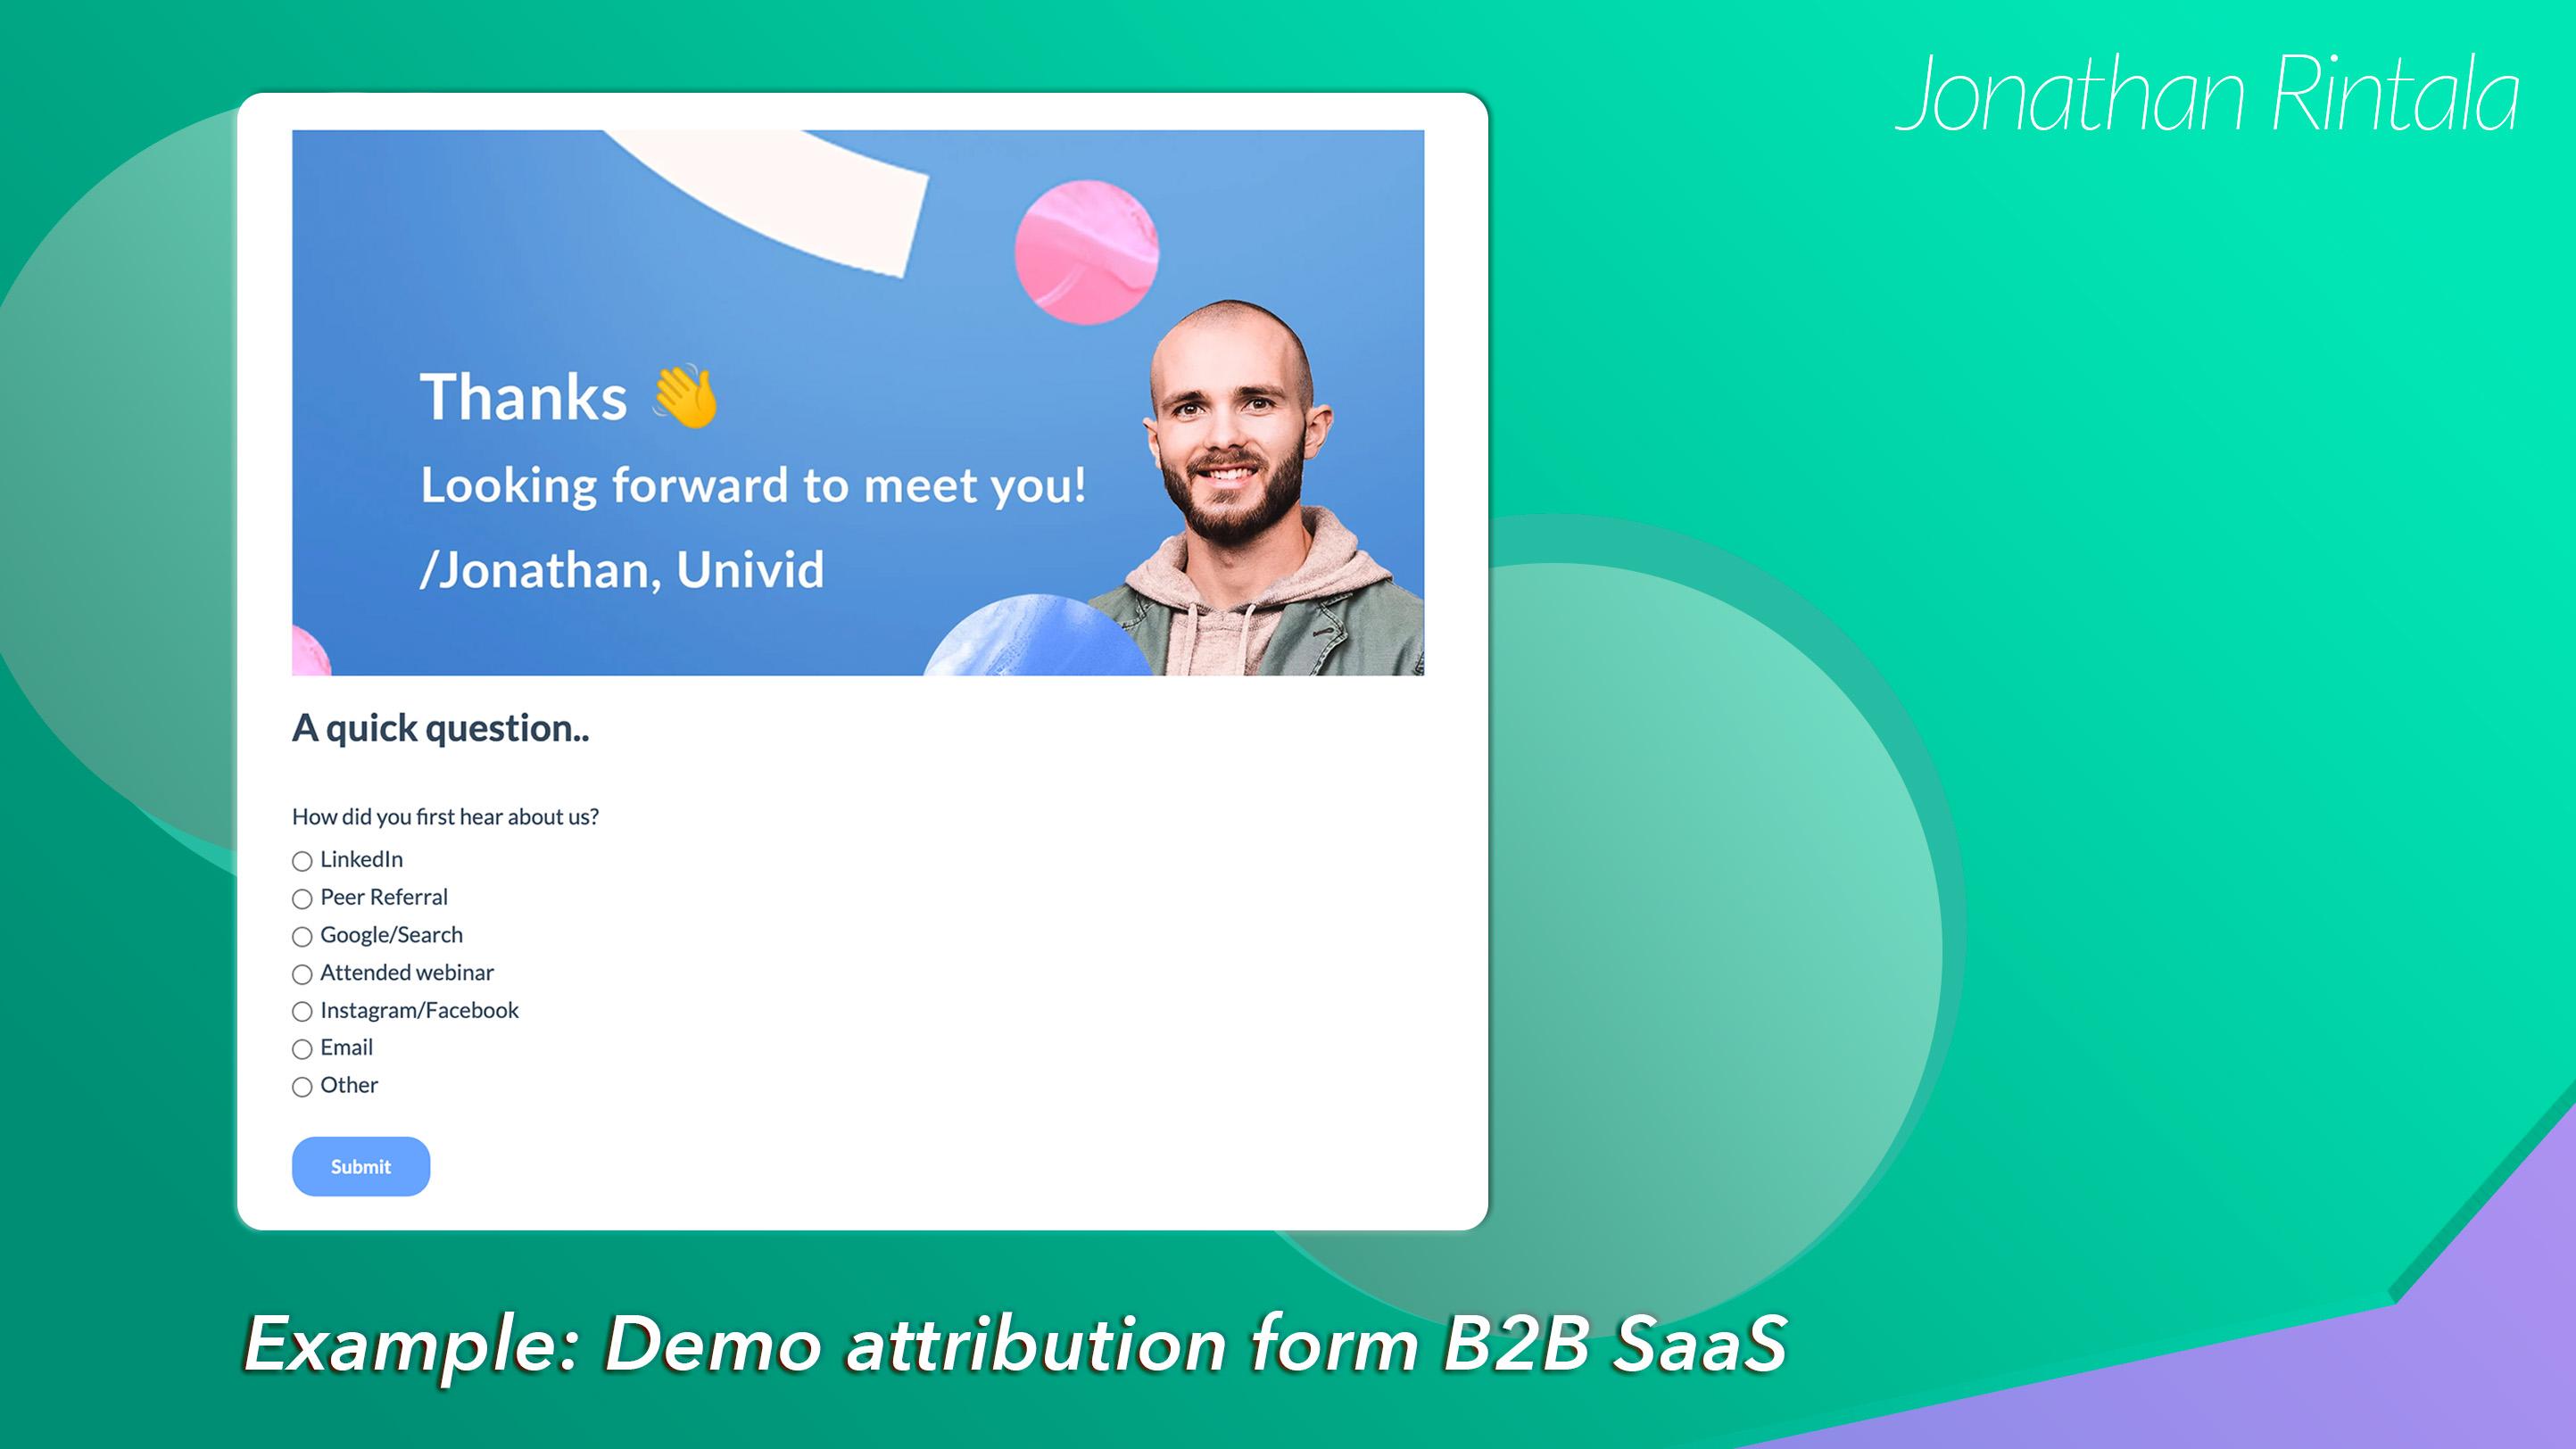 Demo attribution for B2B SaaS through a HubSpot form 